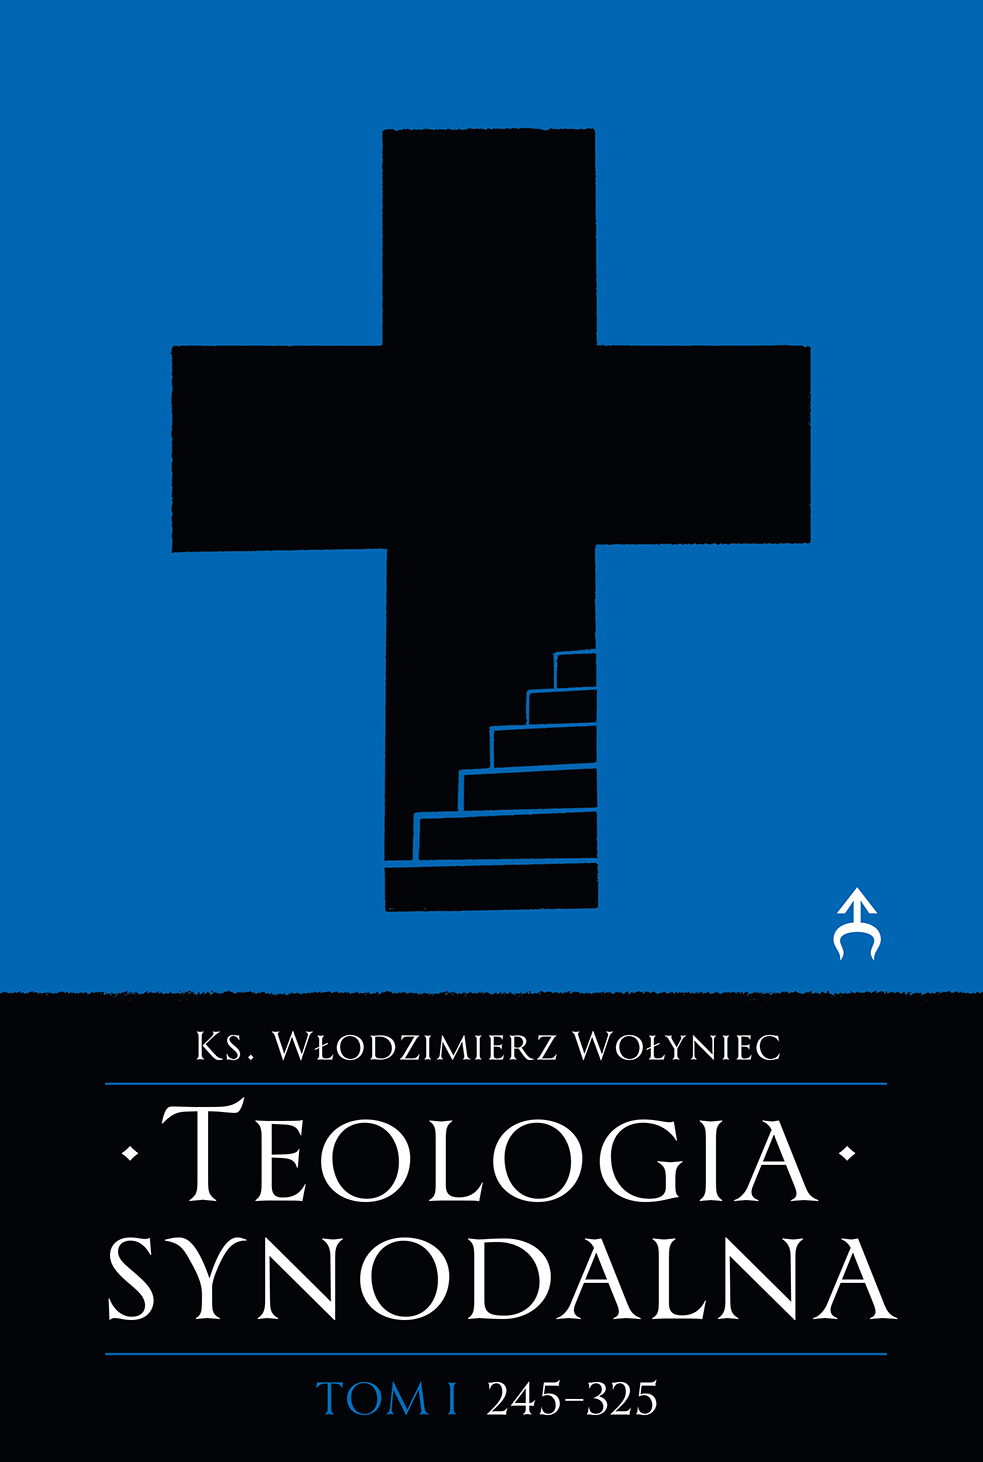 Teologia synodalna Tom I (245-325)